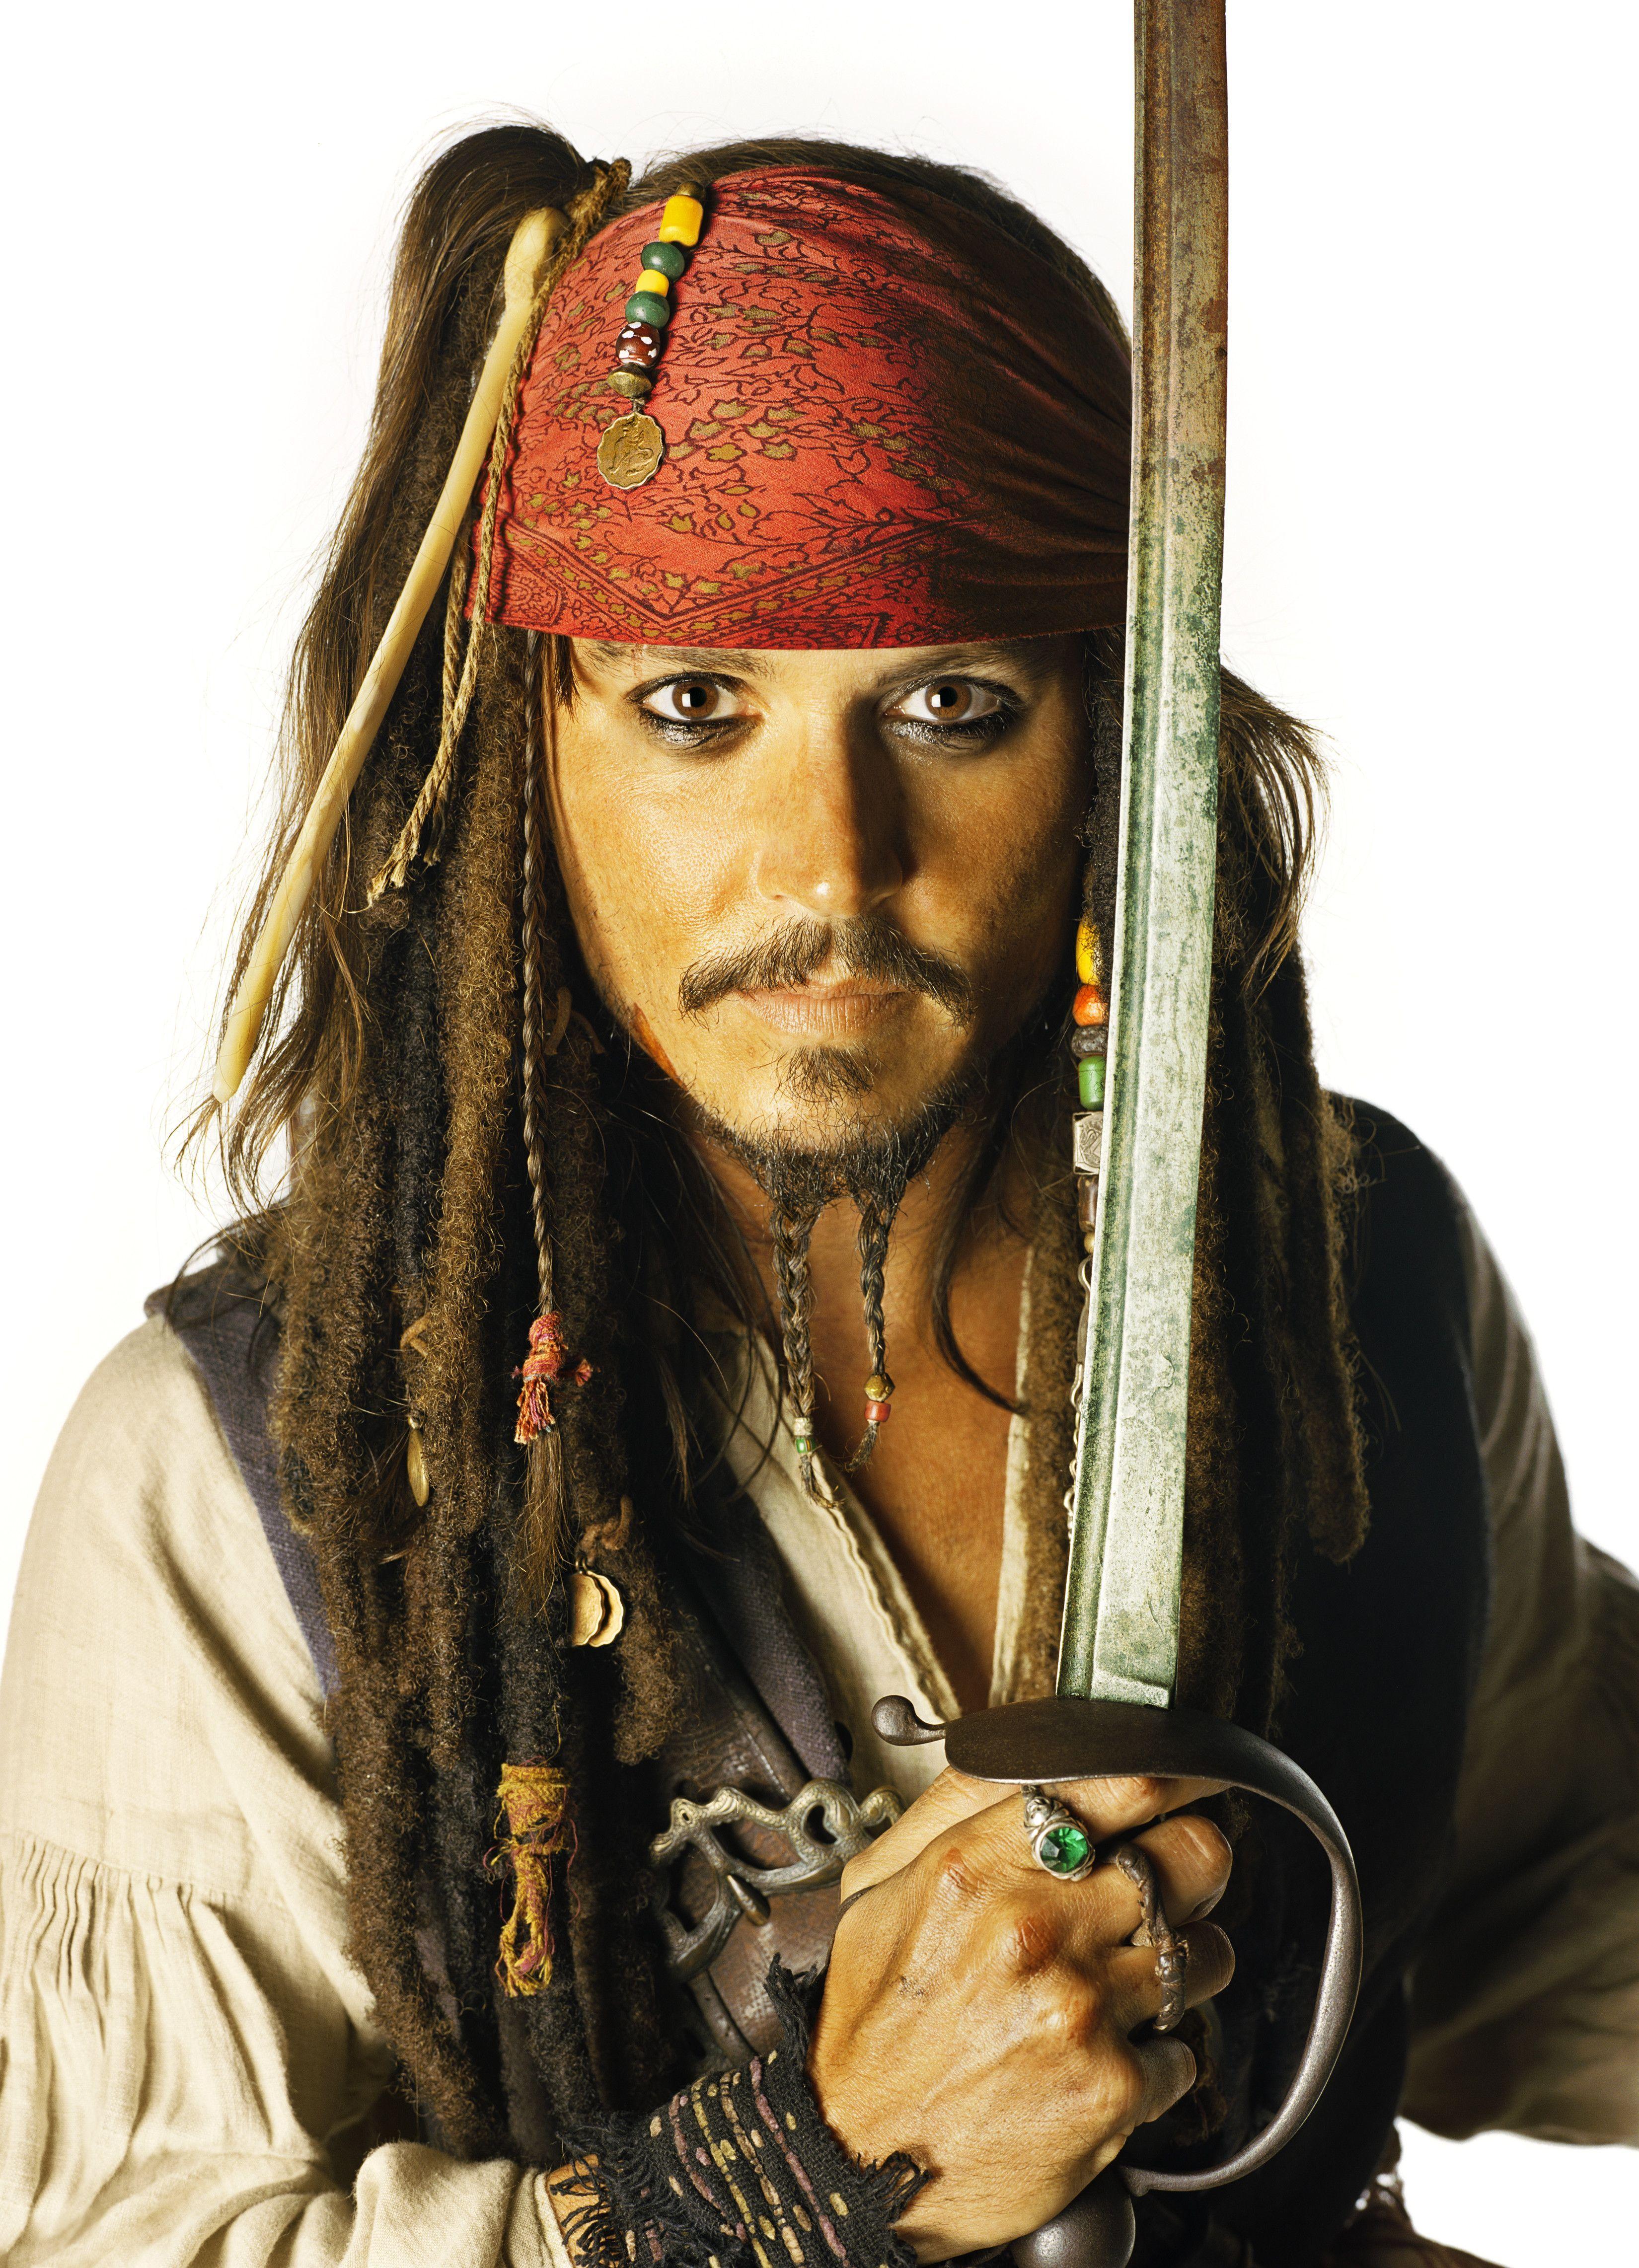 JOHNNY DEPP! Captain Jack Sparrow. Actors I love!